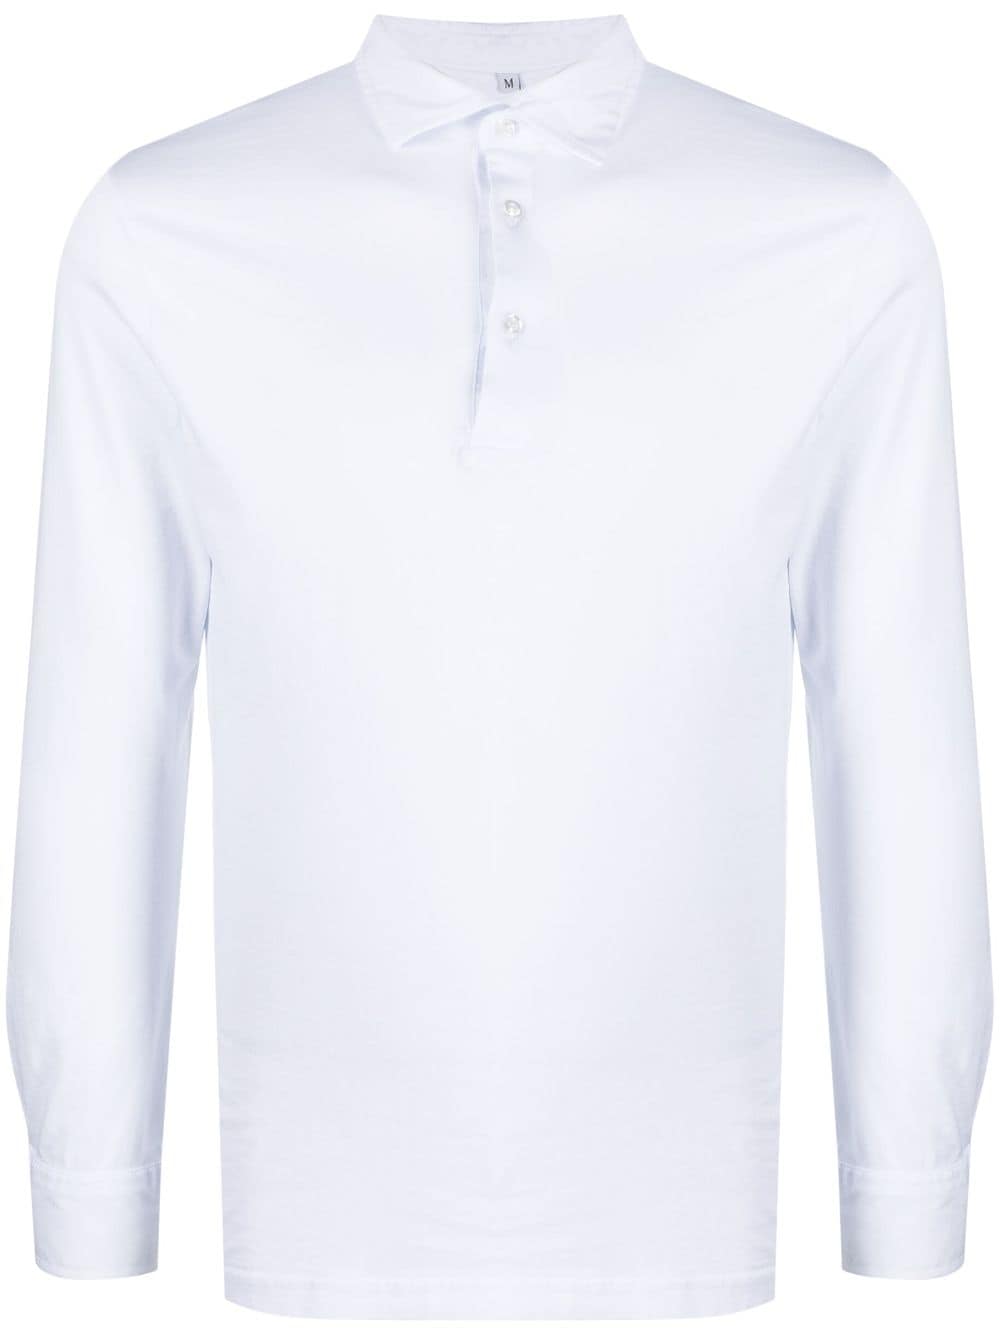 mp massimo piombo long-sleeved cotton polo shirt - white